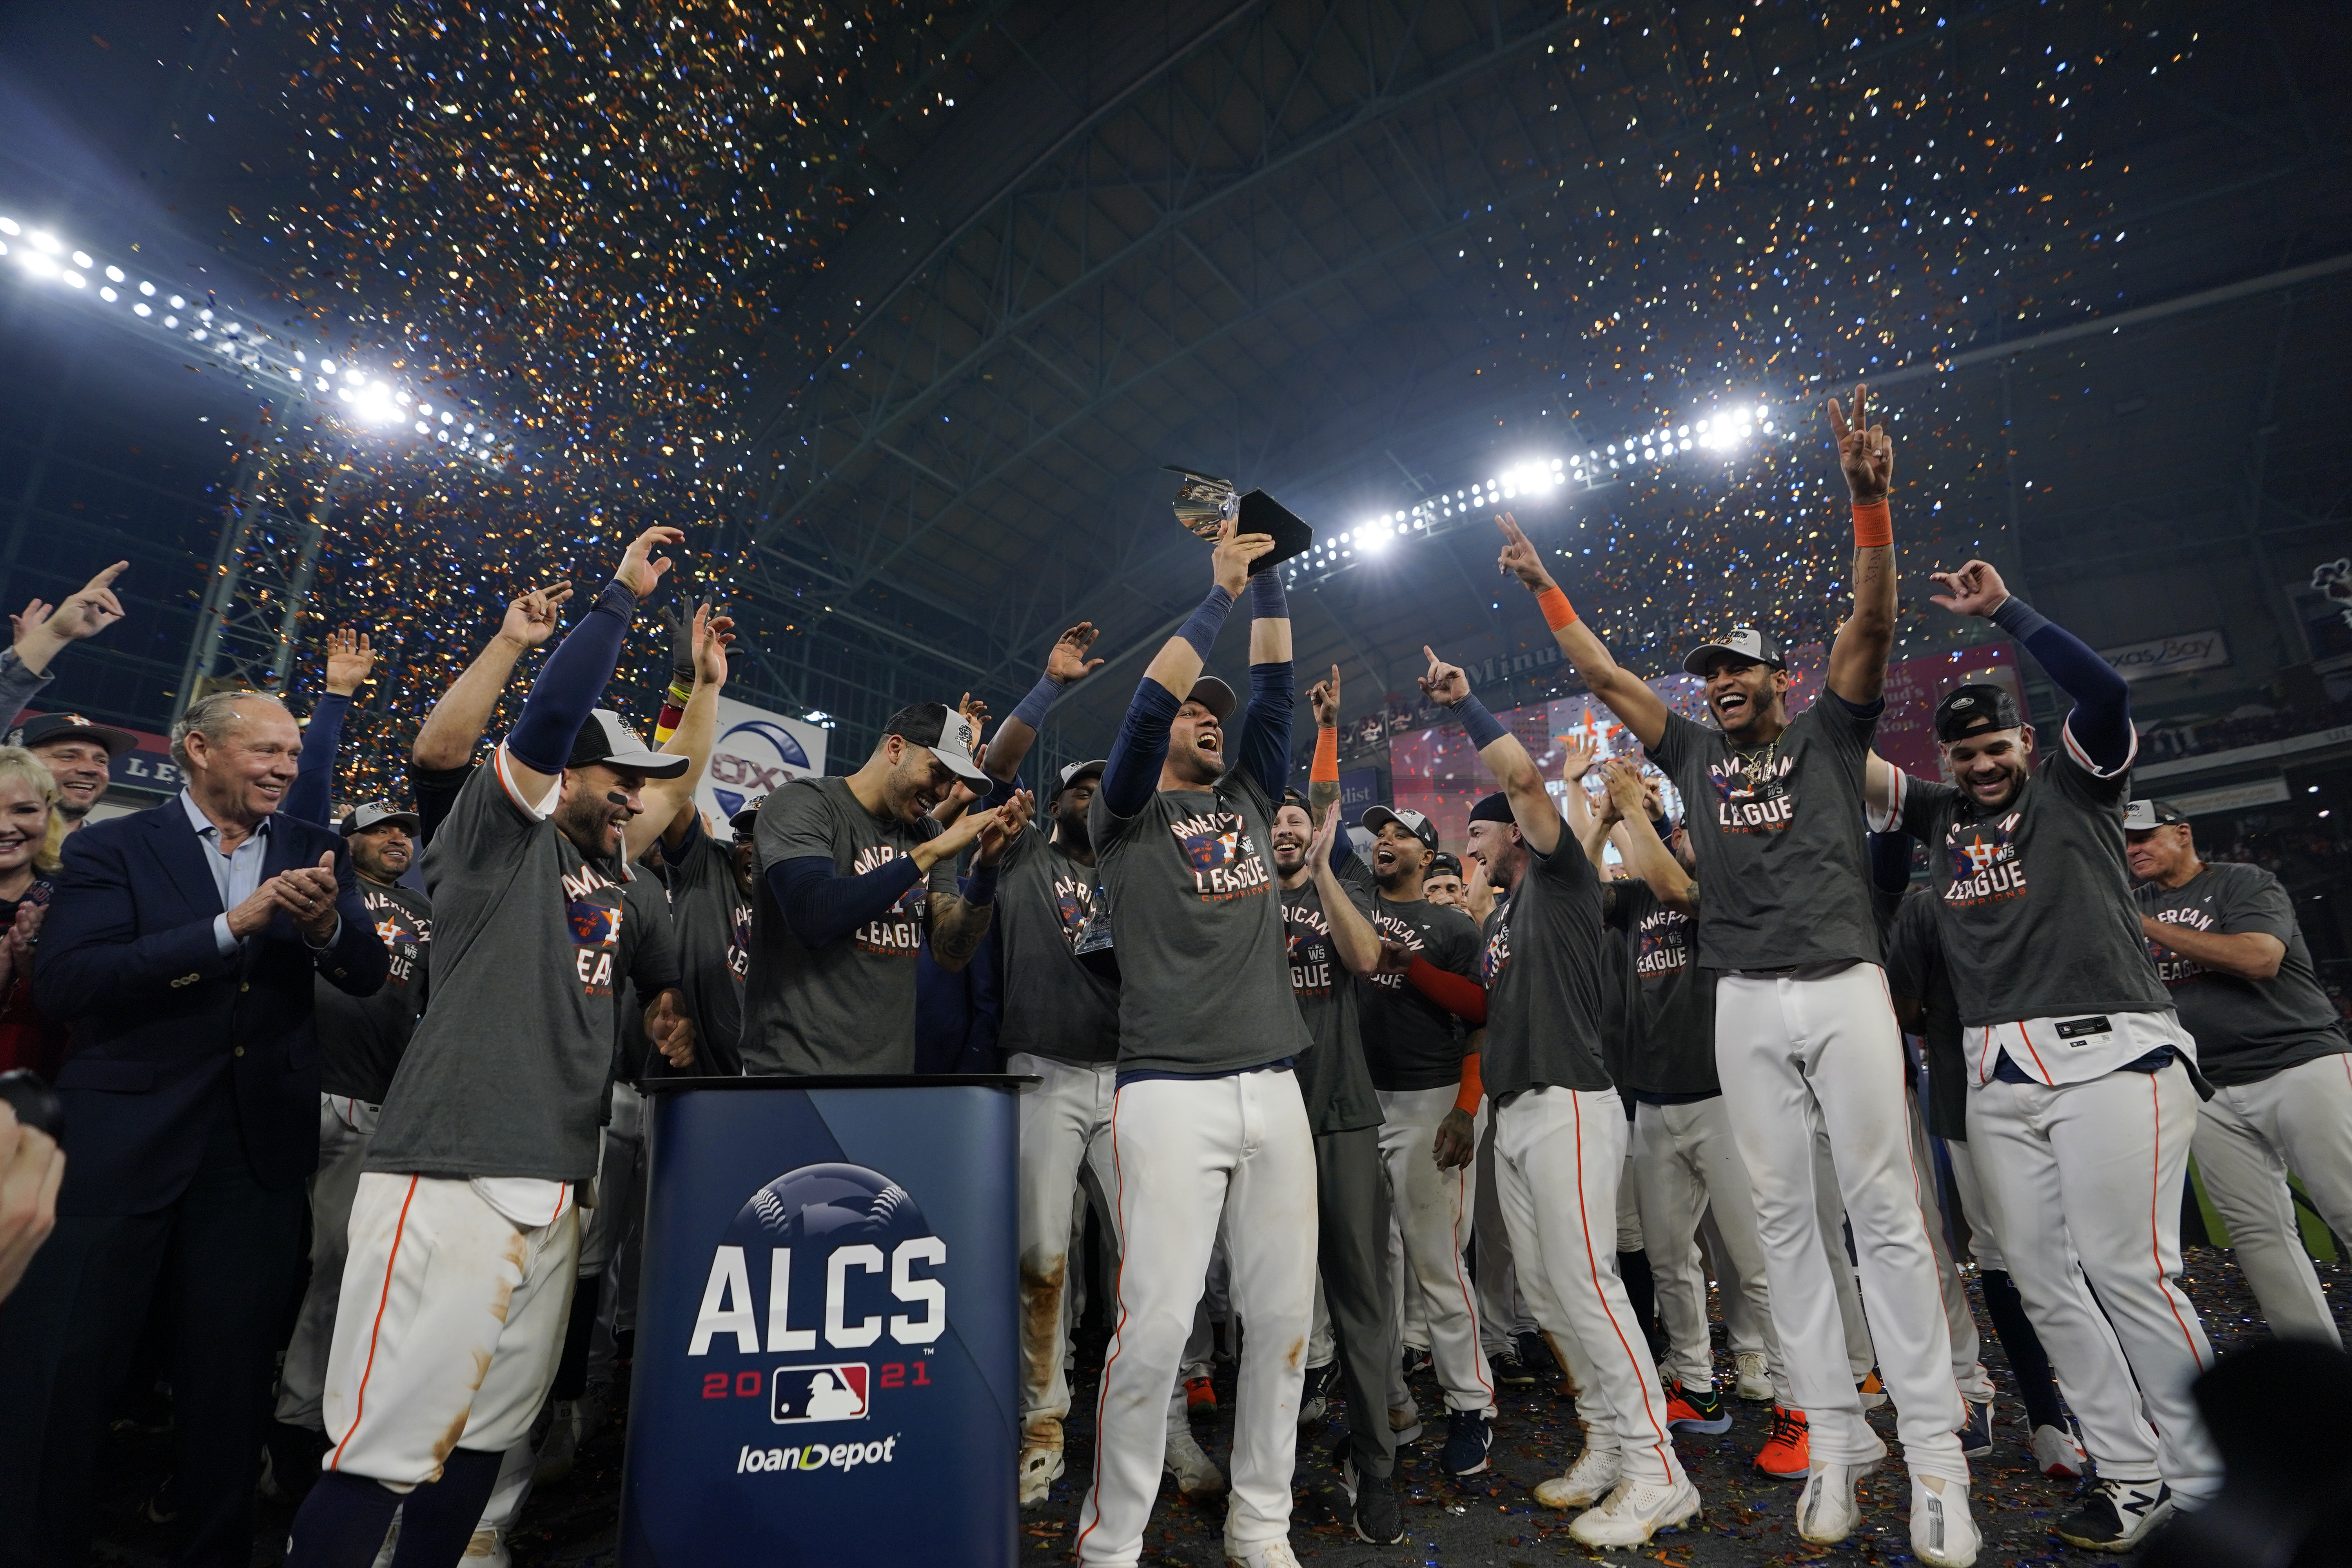 García, Alvarez help Astros oust Red Sox, reach World Series - The